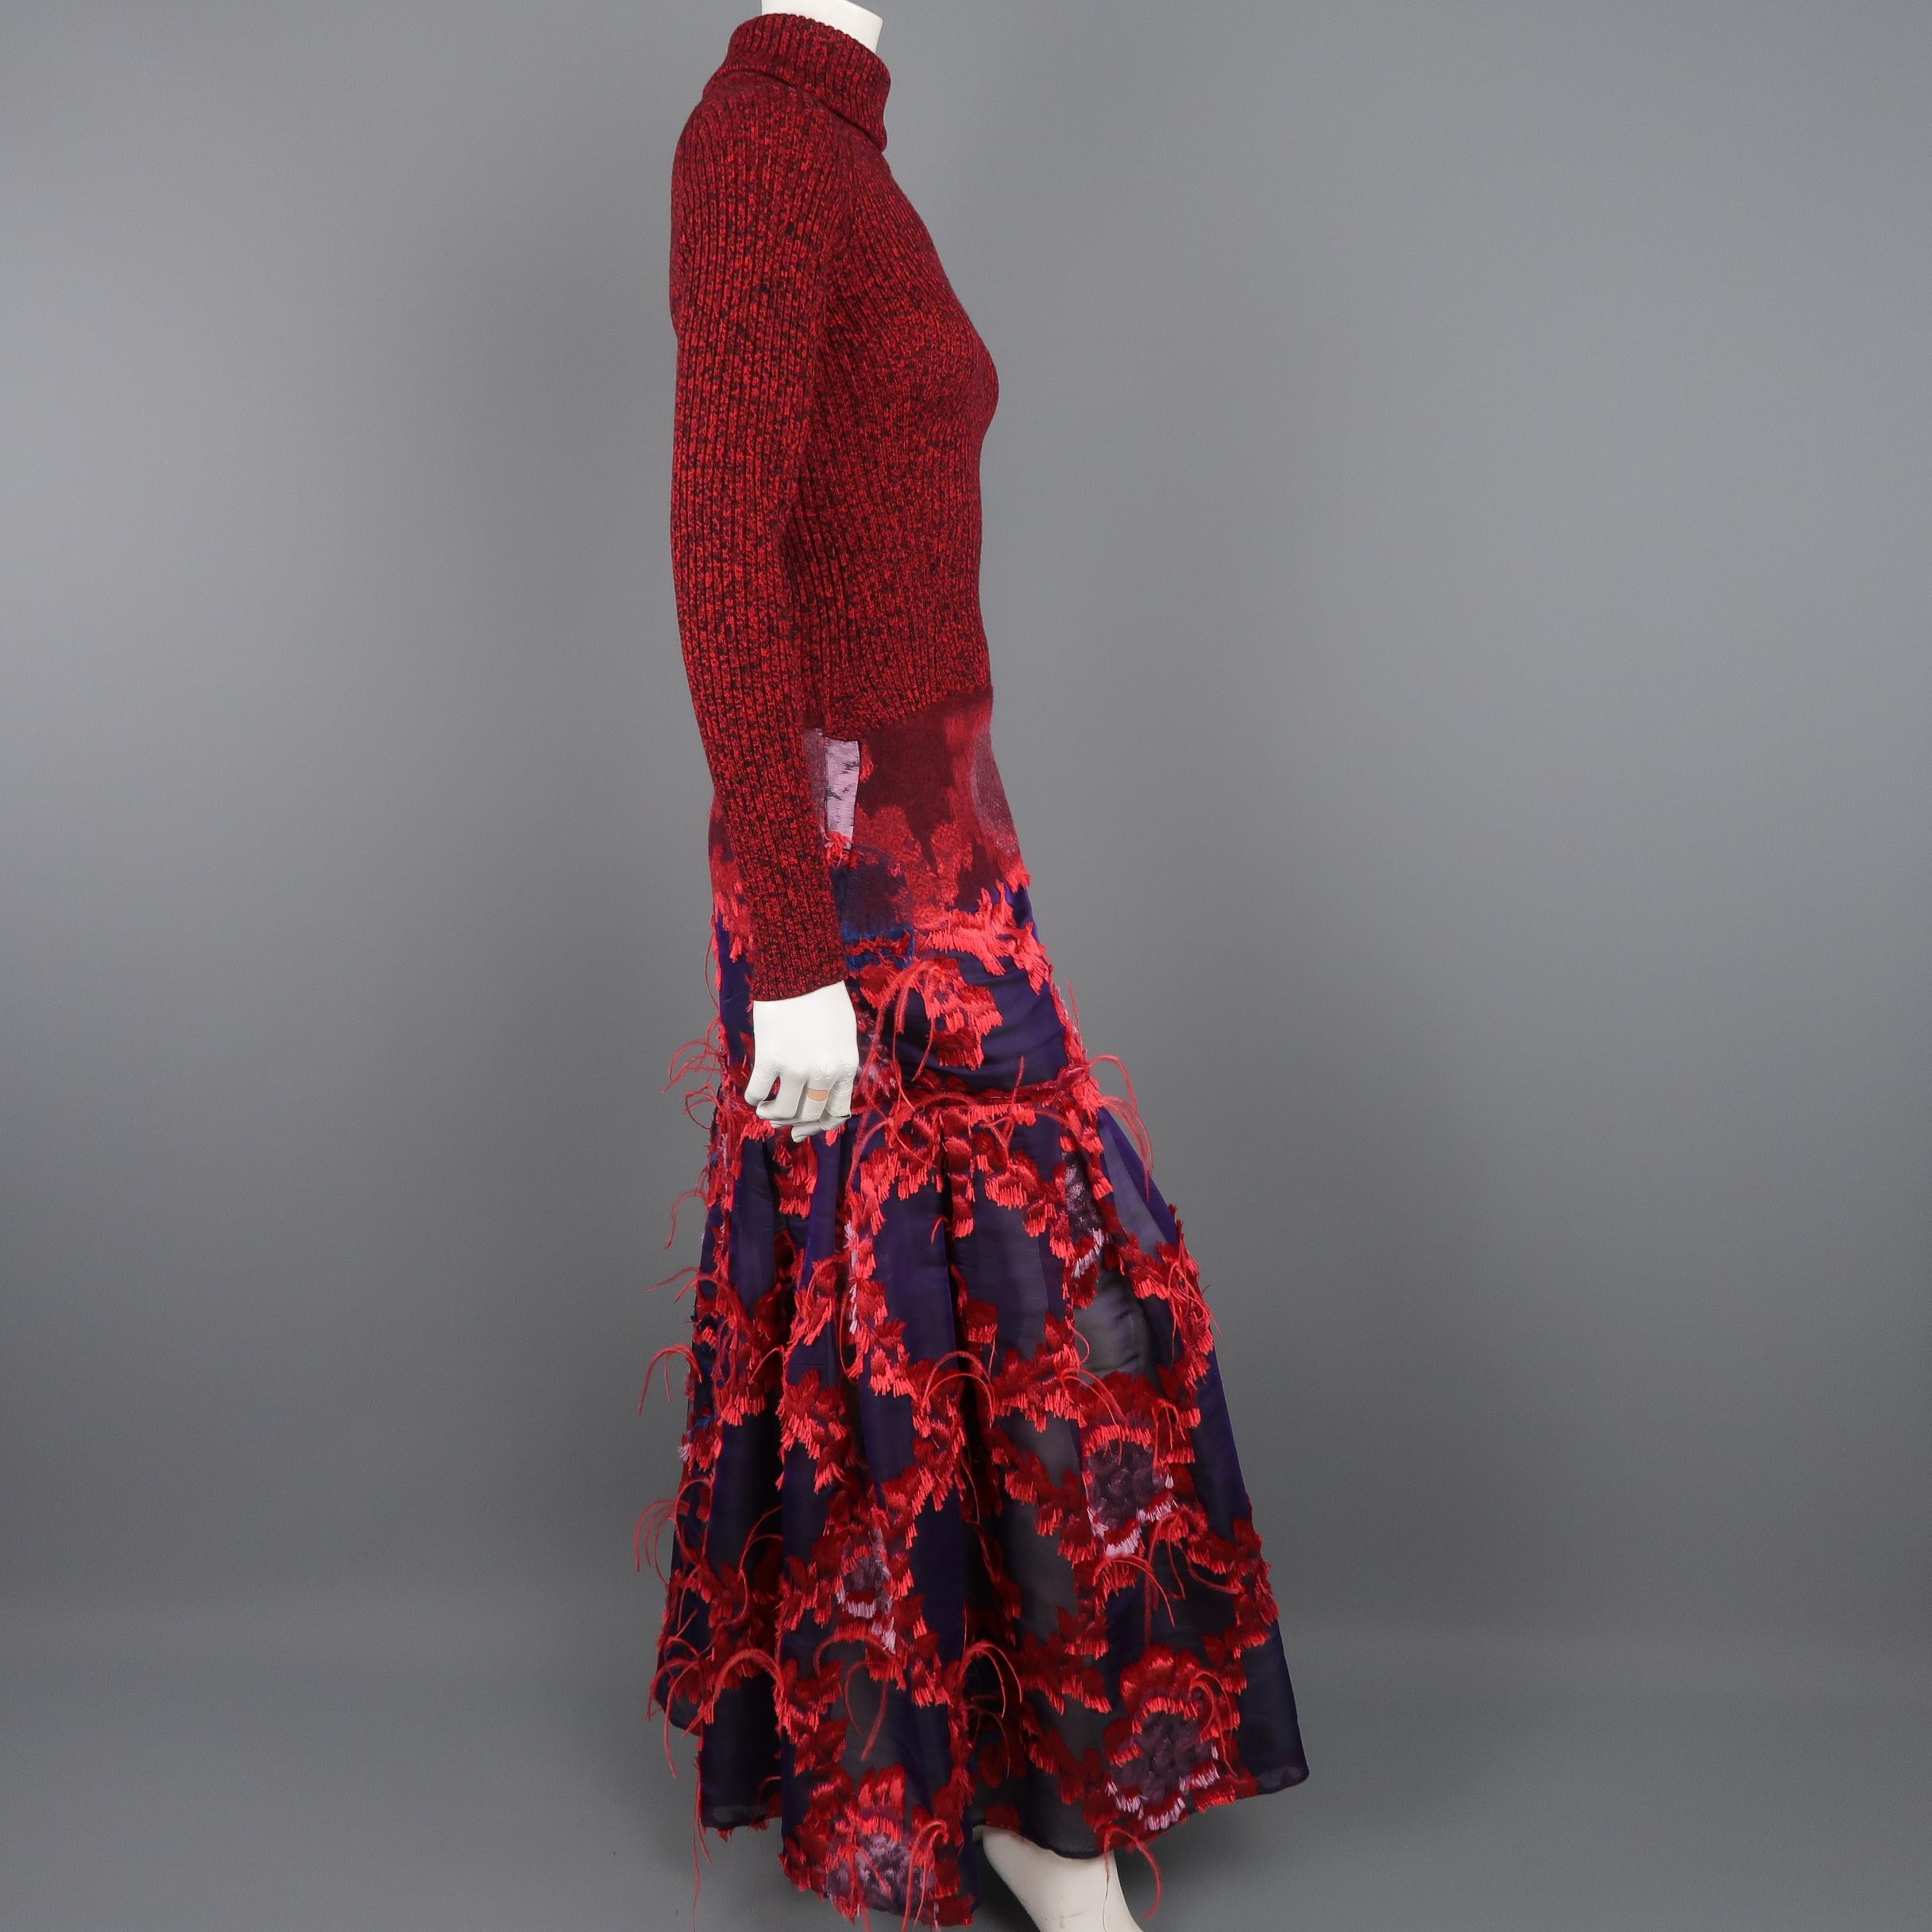 ERDEM Gown - Fall 2015 Runway - Red, Purple, Knit, Taffeta Feather Evening Dress 5